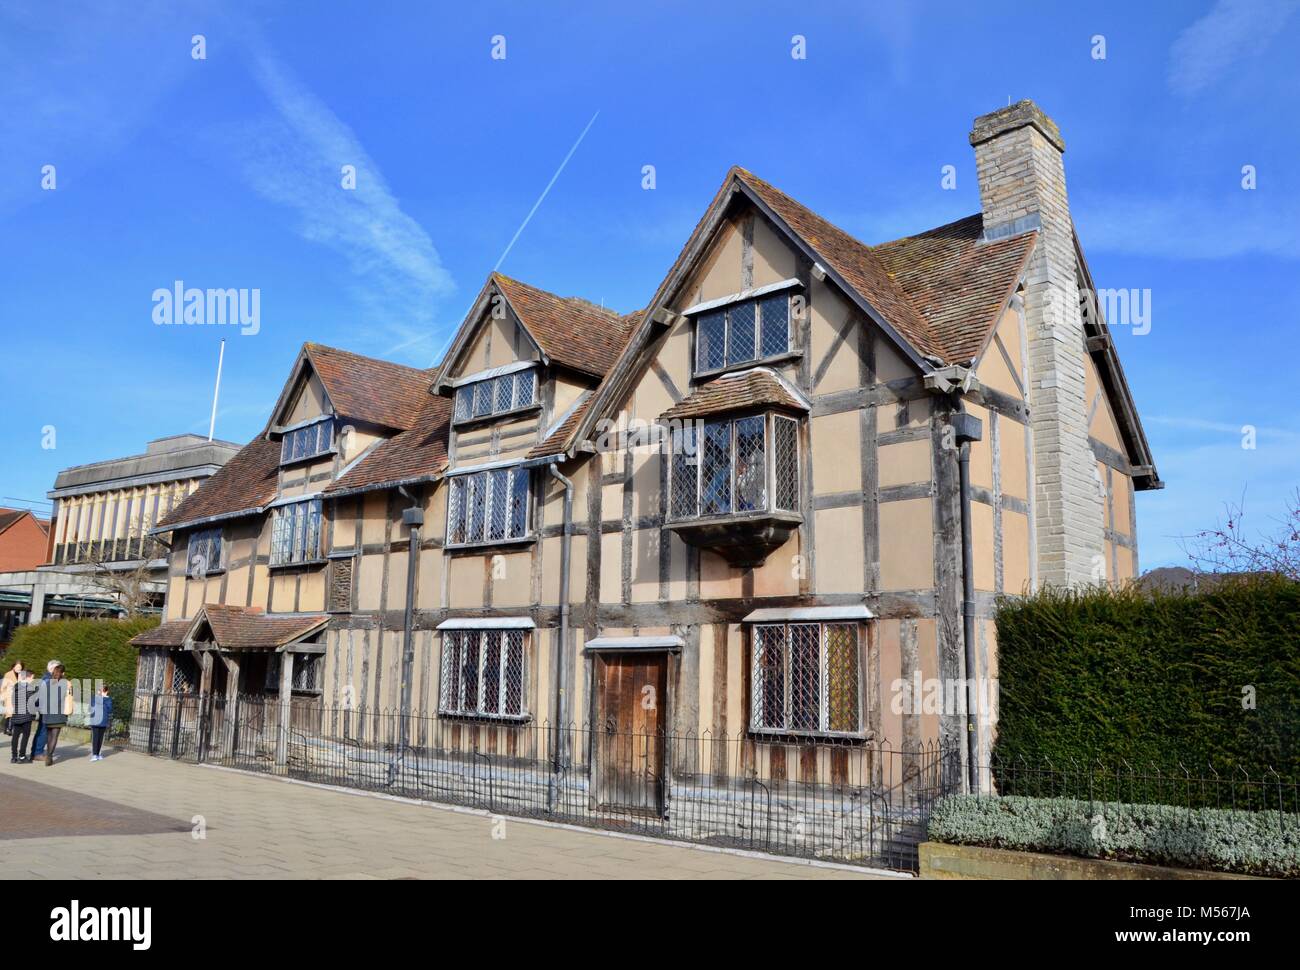 William Shakespeares bithplace henley street Stratford upon Avon warwickshire UK Banque D'Images